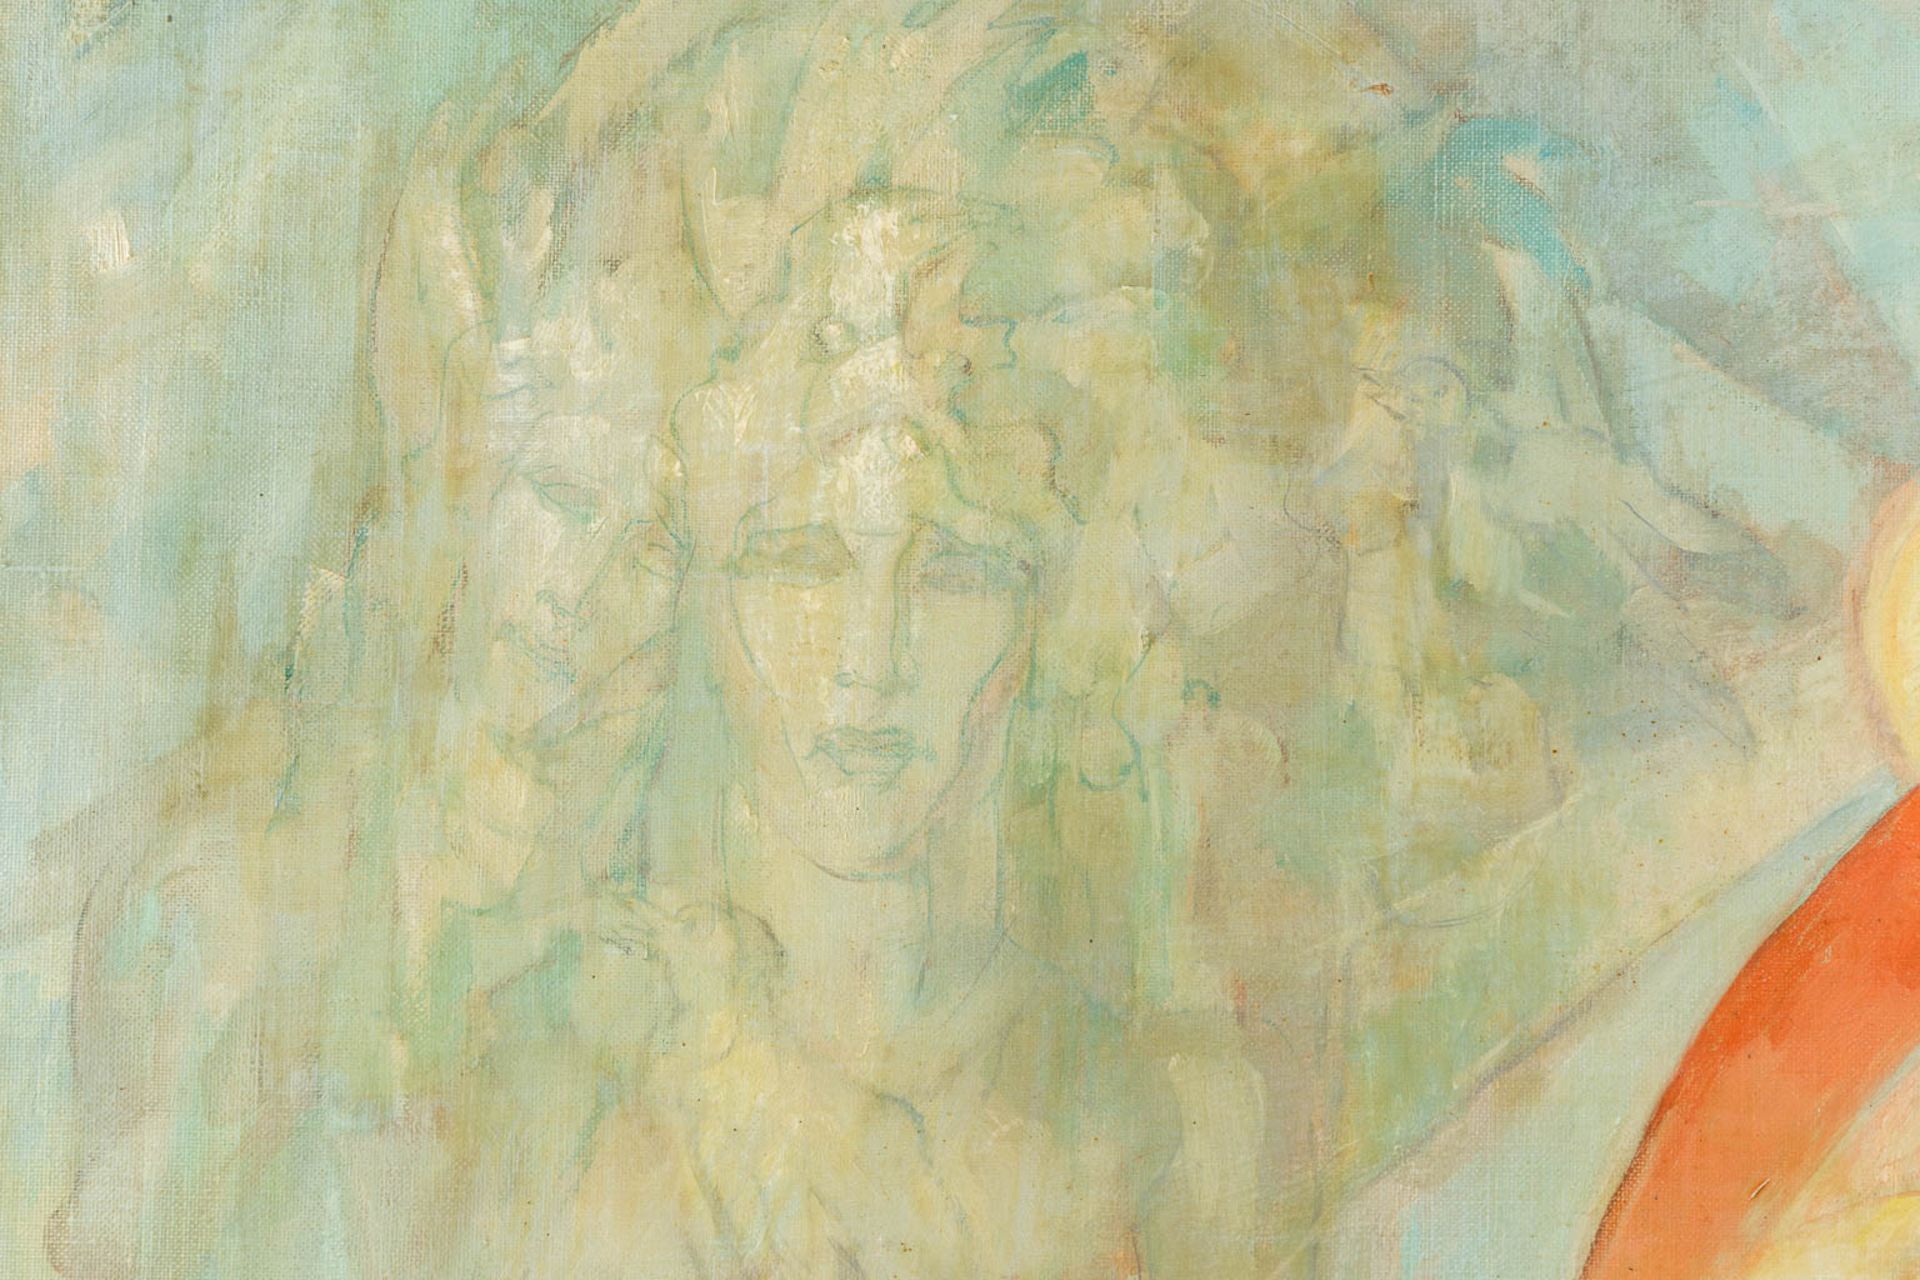 Edmond VAN DOOREN (1896-1965) 'Futuristic composition' oil on canvas. 1956. (W:120 x H:100 cm) - Image 4 of 11